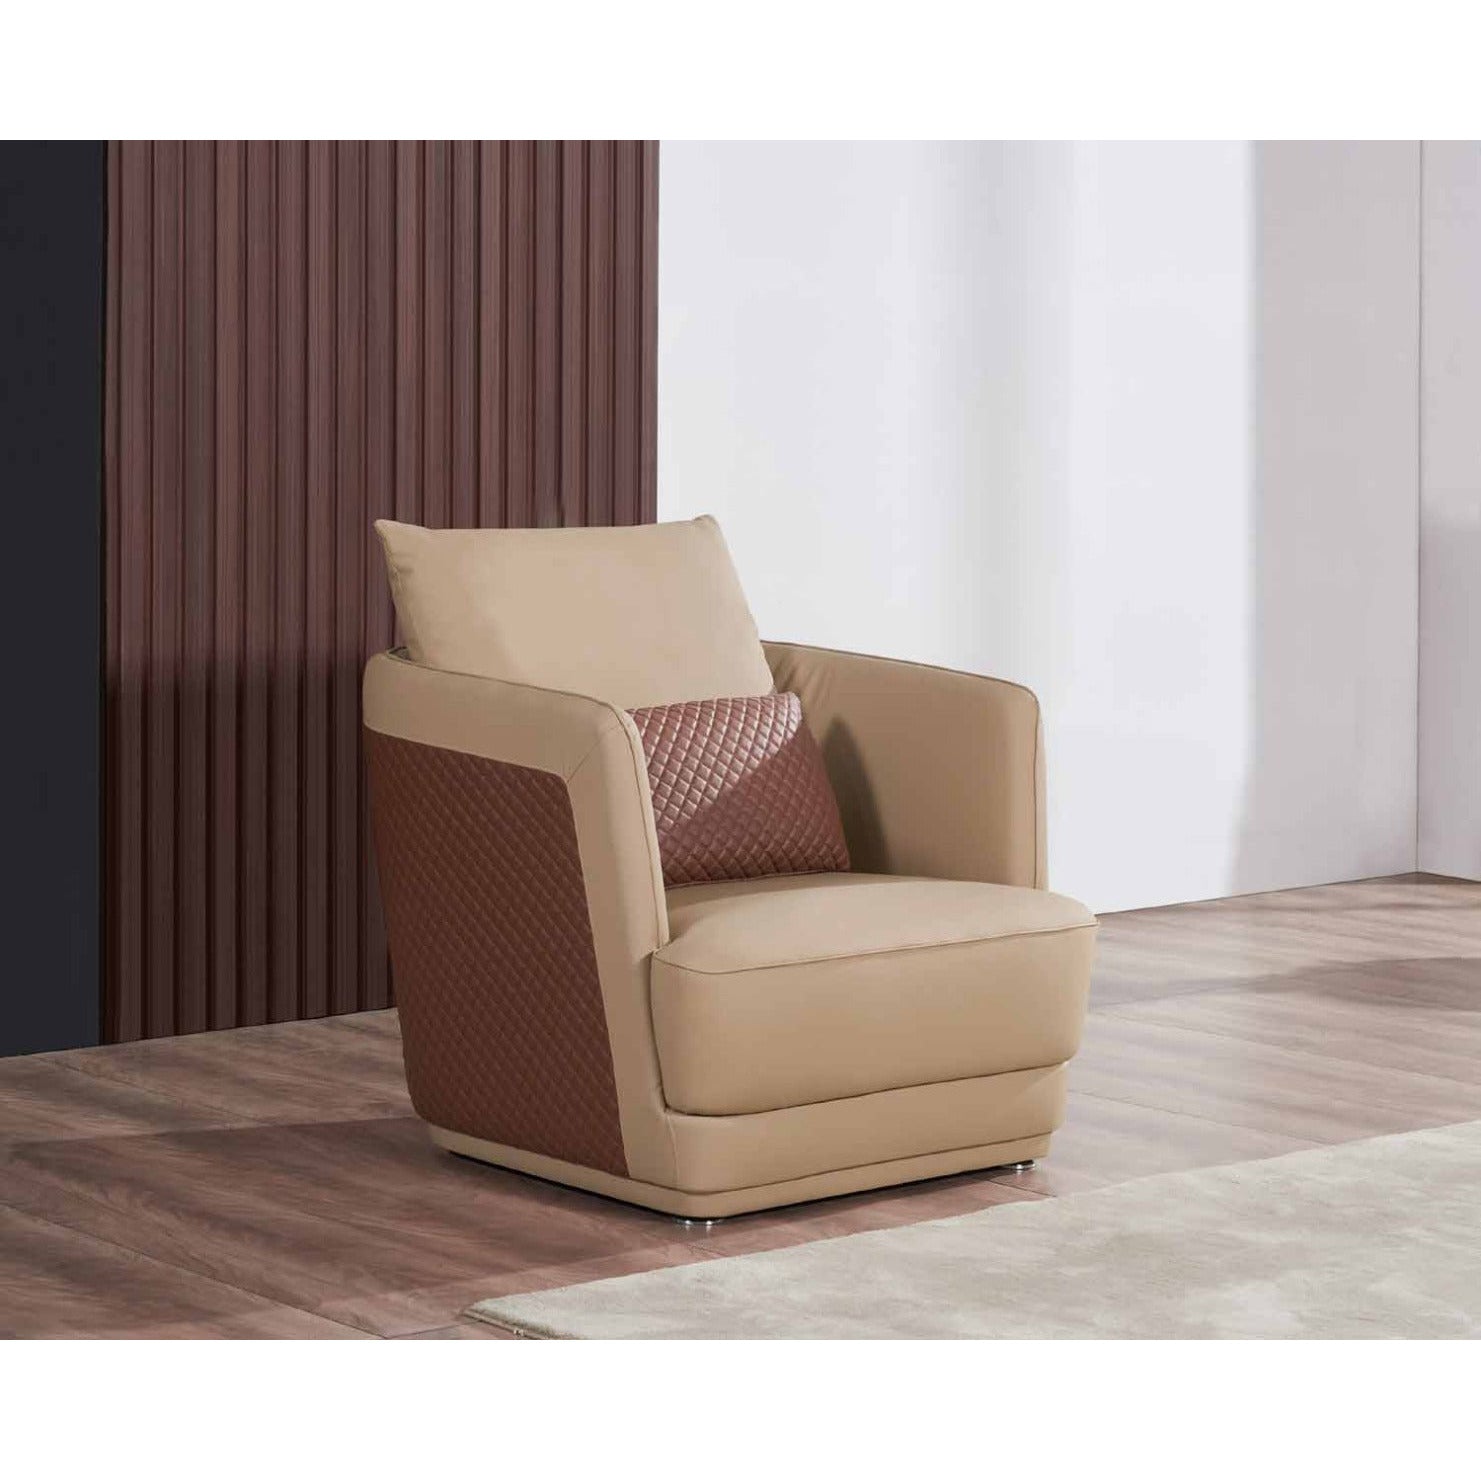 European Furniture - Glamour 3 Piece Living Room Set in Tan-Brown - 51617-3SET - New Star Living